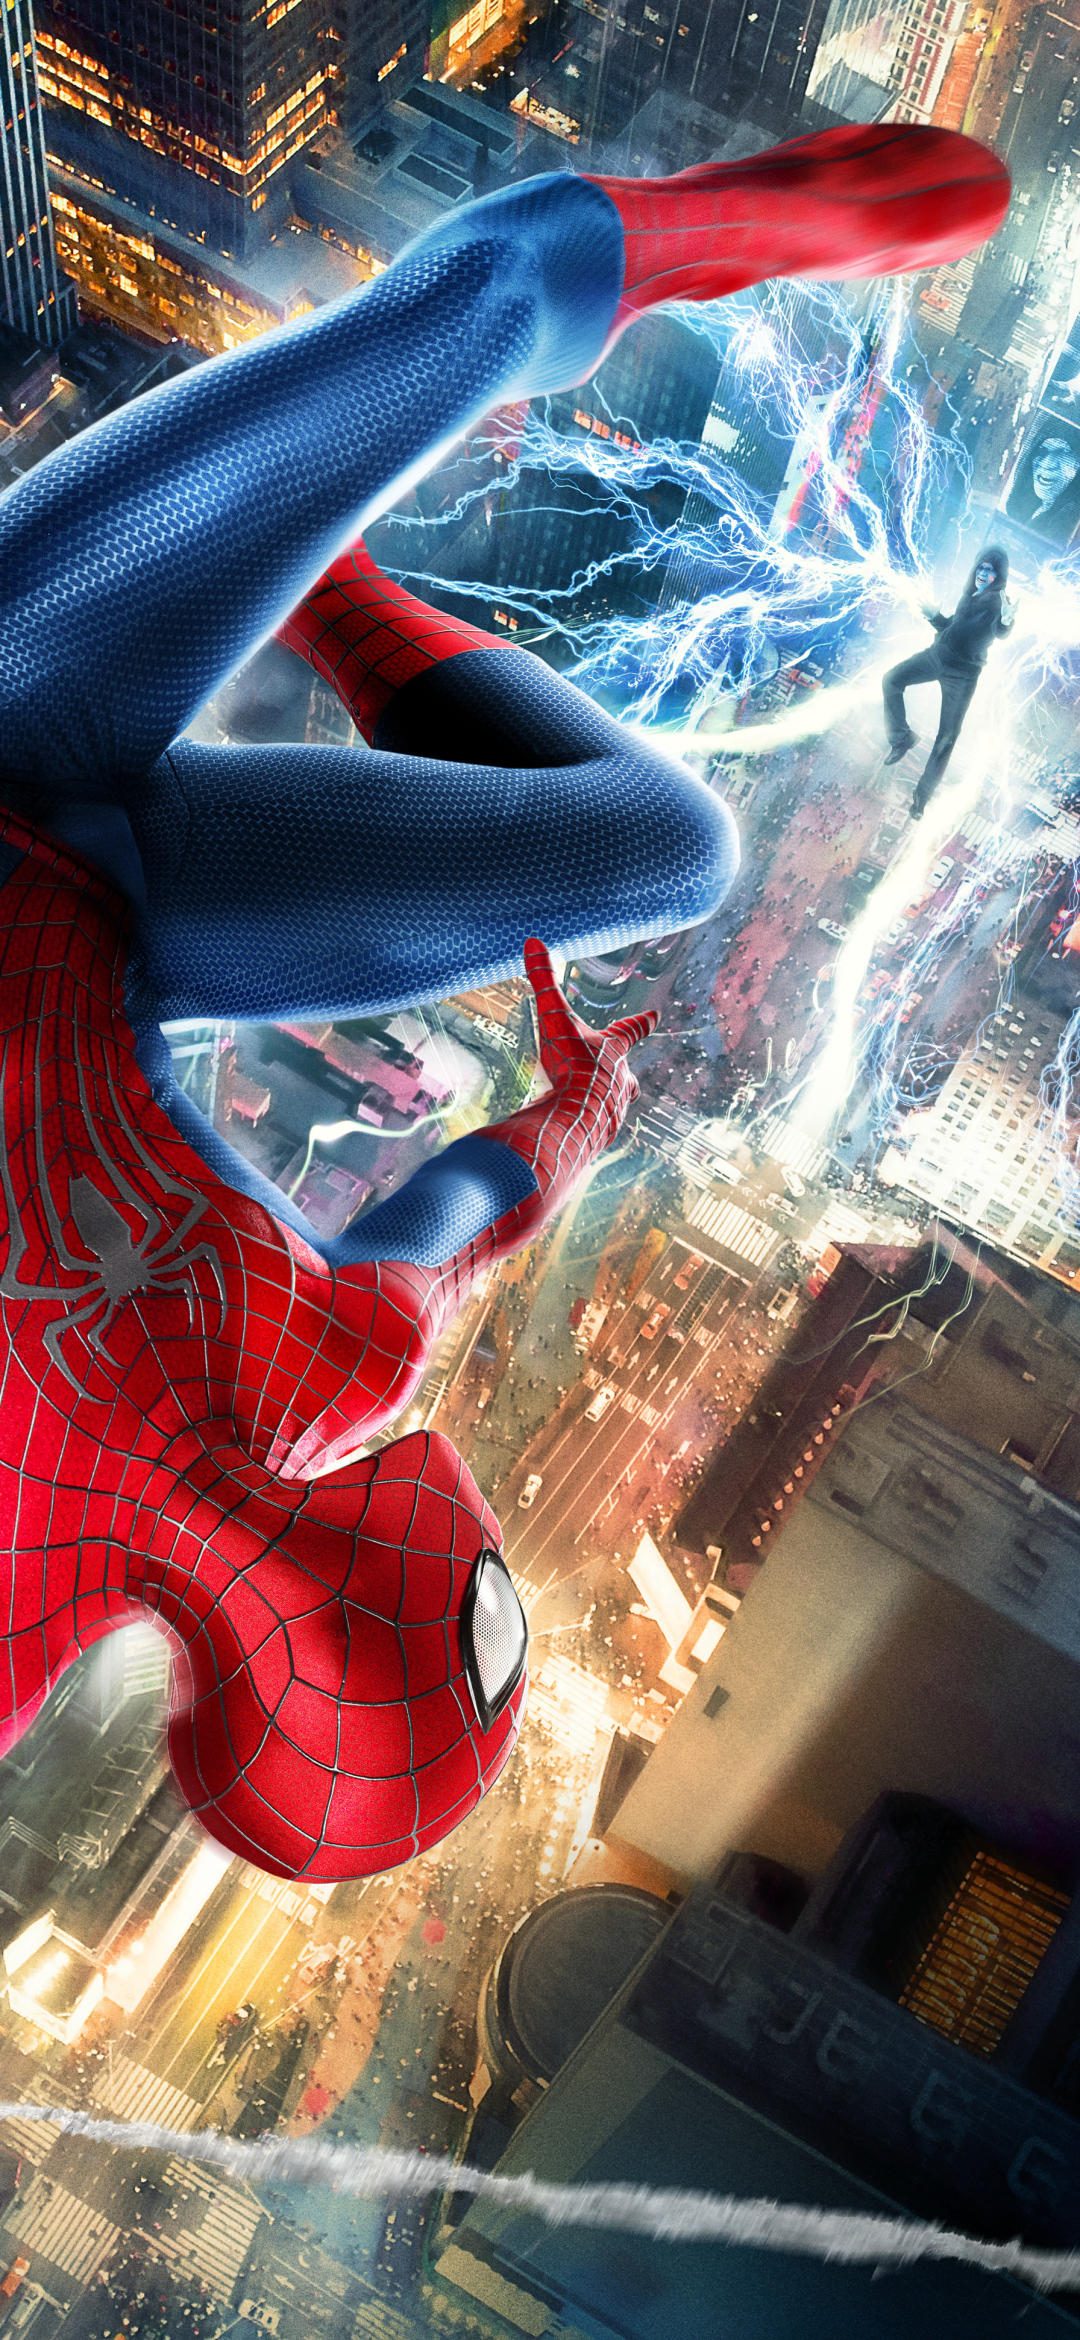 the amazing spider man 2, movie, spider man, electro (marvel comics)